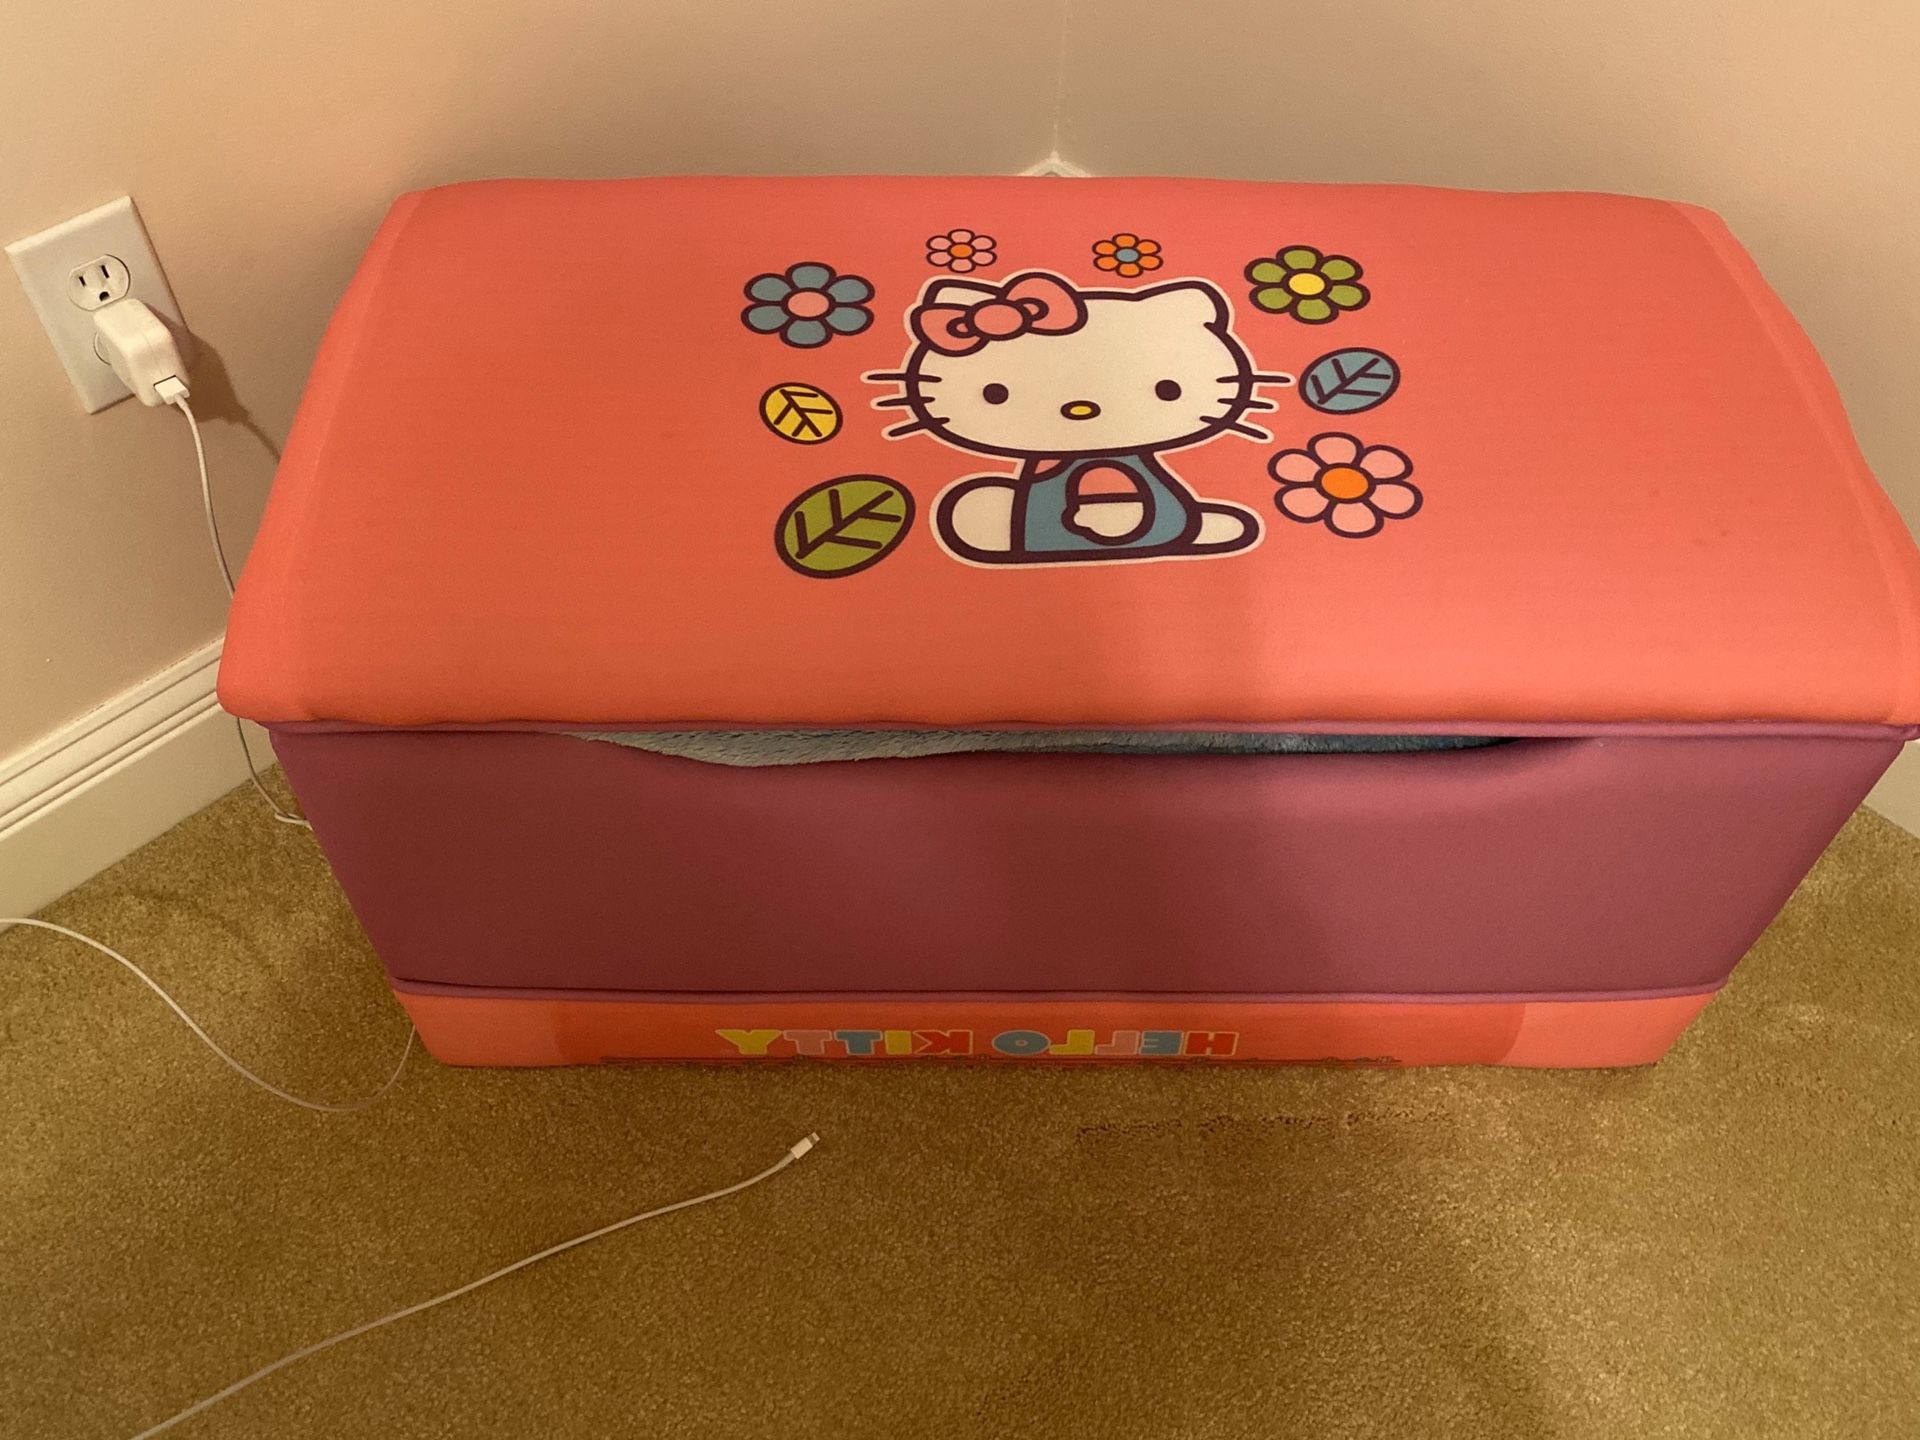 Toy storage box and hello kitty clock